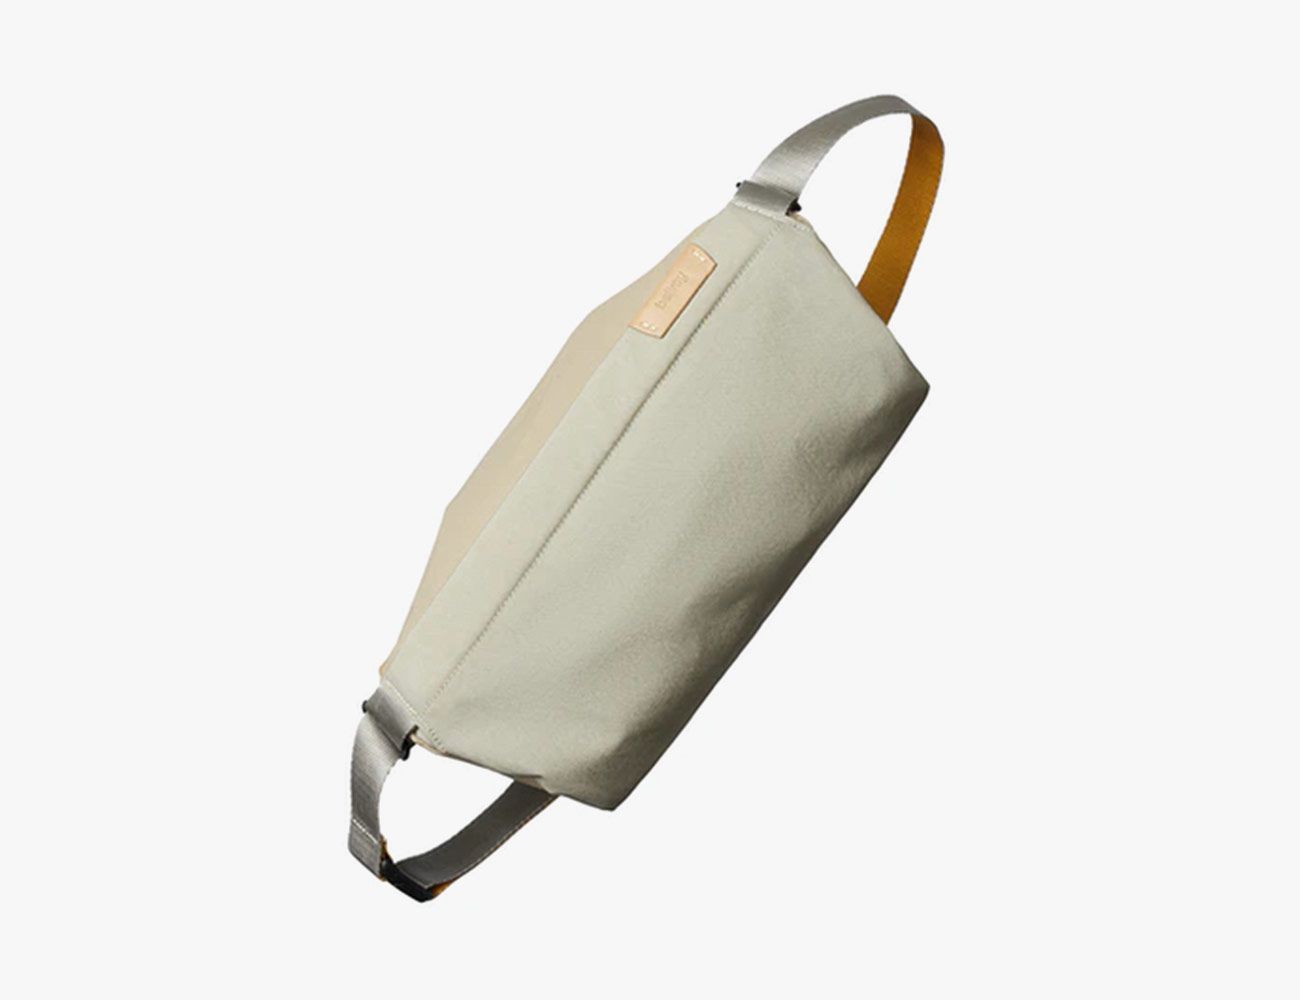 Men's Crossbody Bags - Where to Buy the Best Styles - VanityForbes